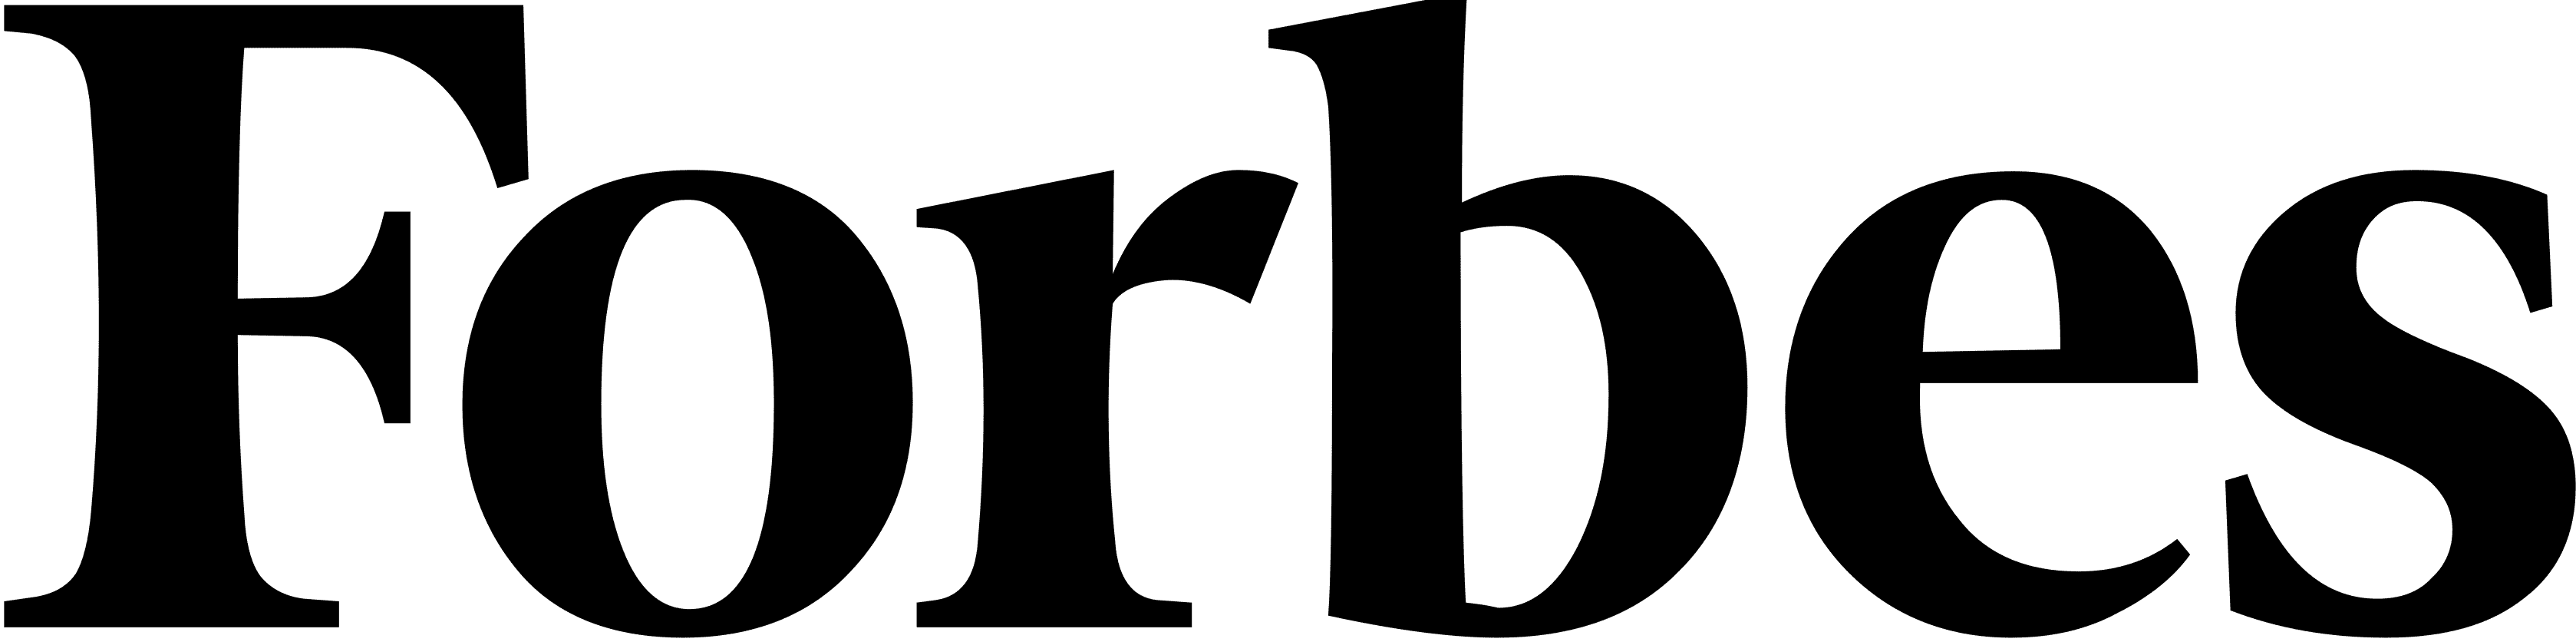 Forbes-logo_crop